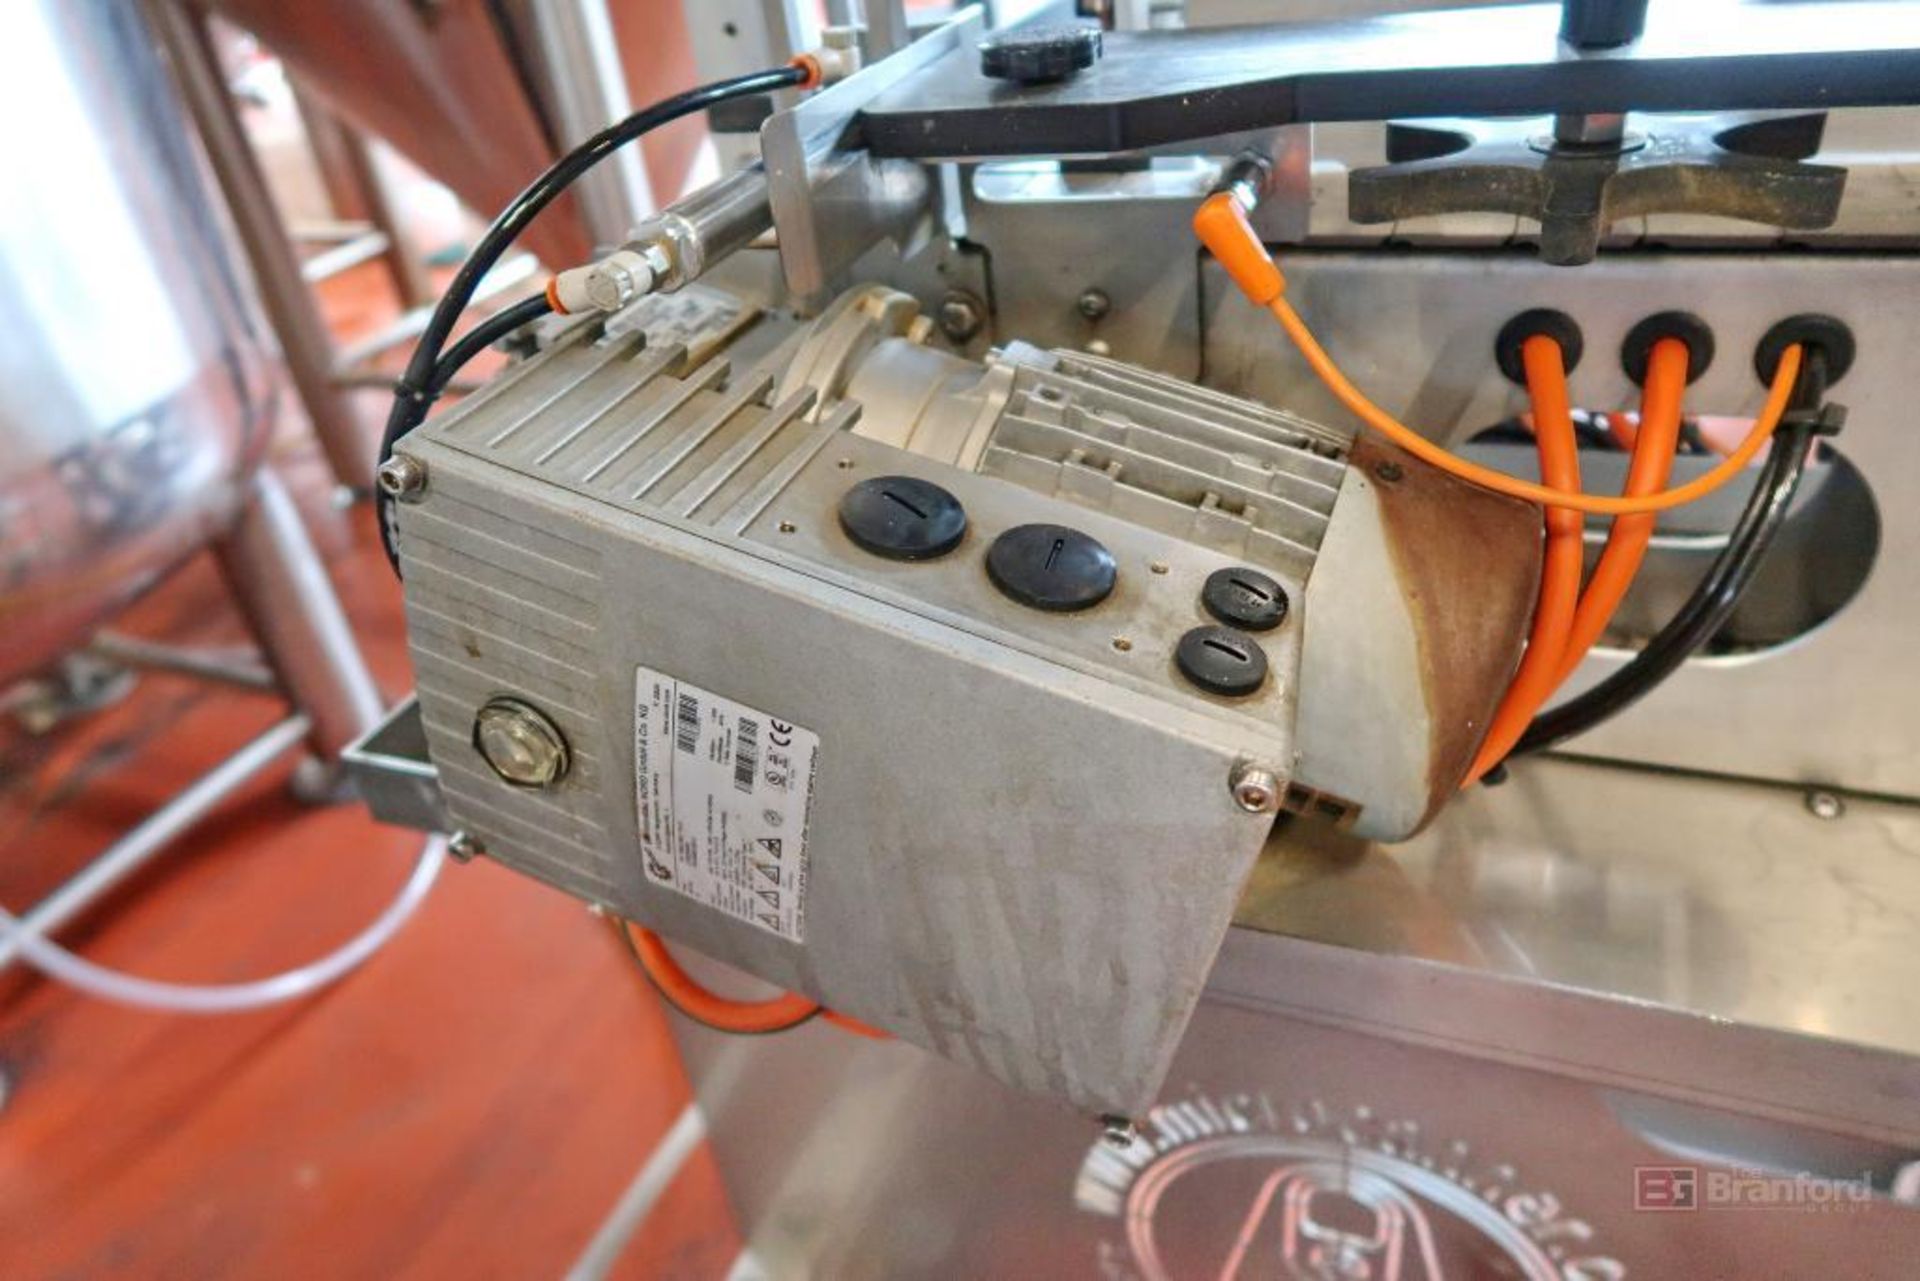 Microcanner Model MC-CRAFT, 4-Valve Beer Canning Line - Image 4 of 18